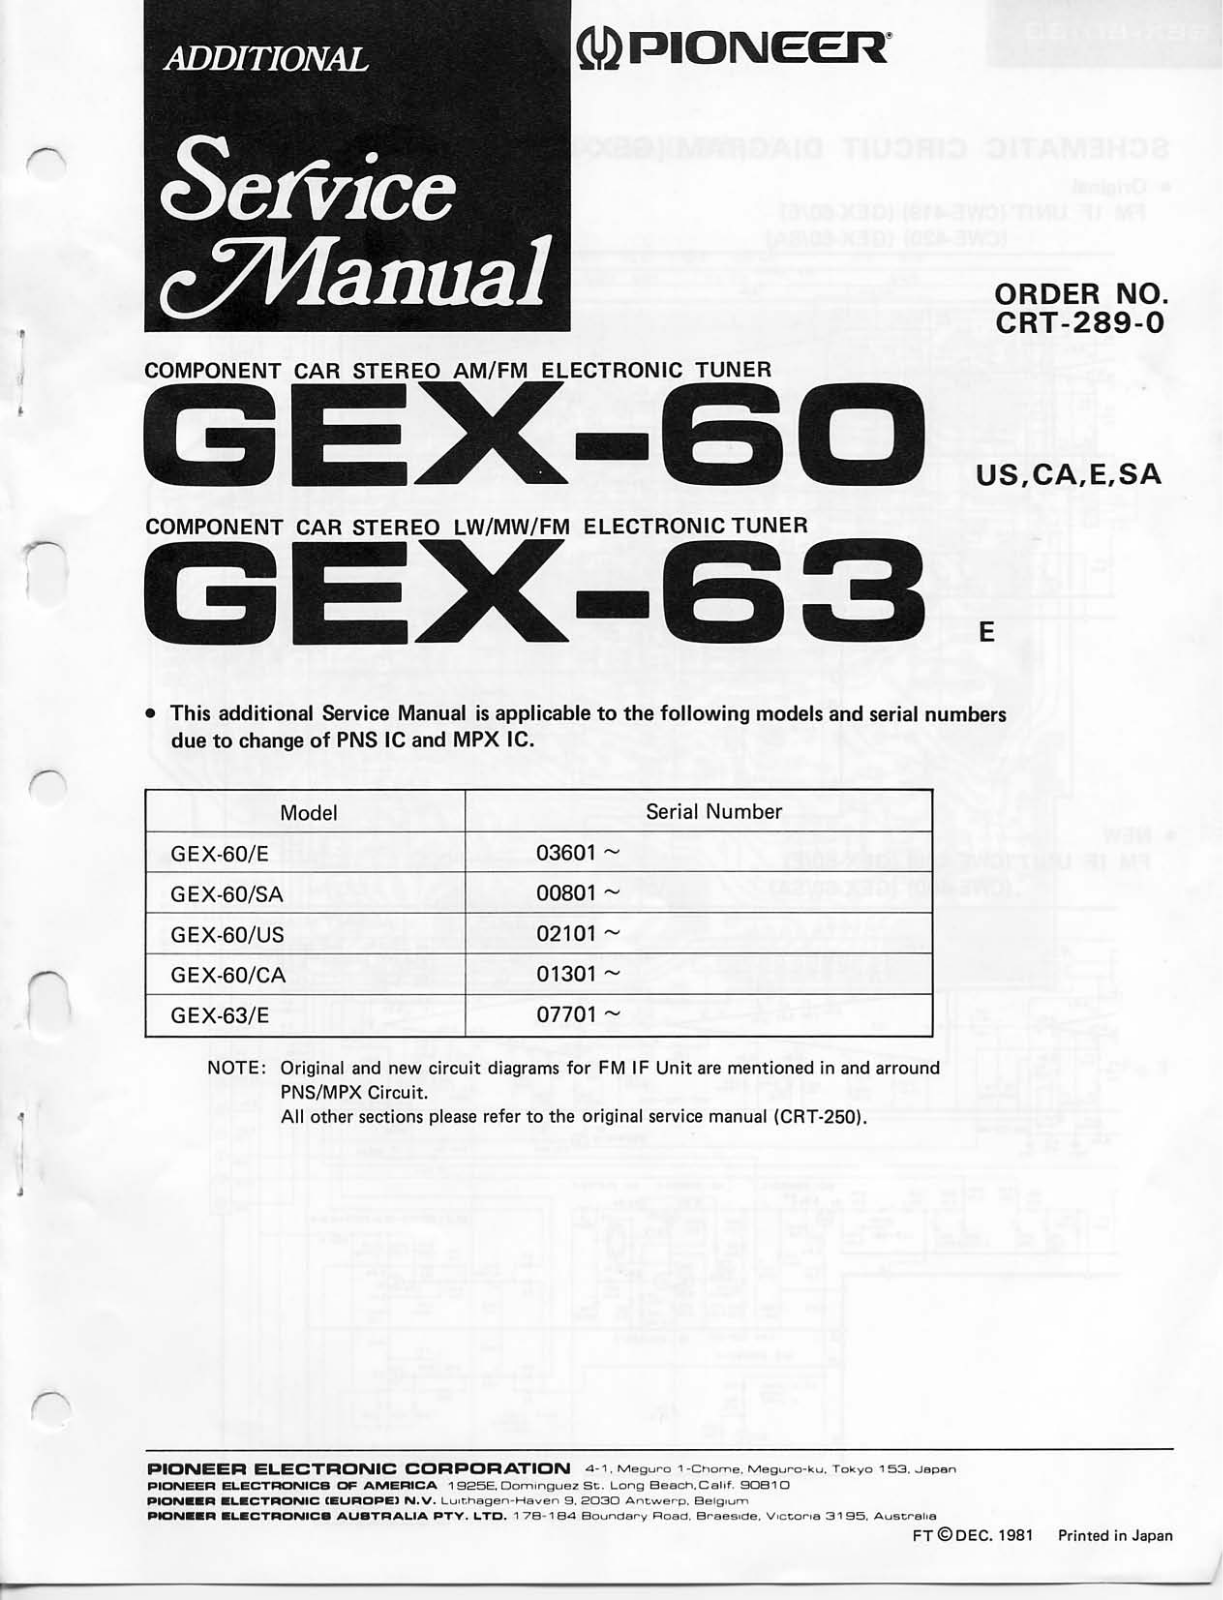 Pioneer GEX-60, GEX-63 Service Manual